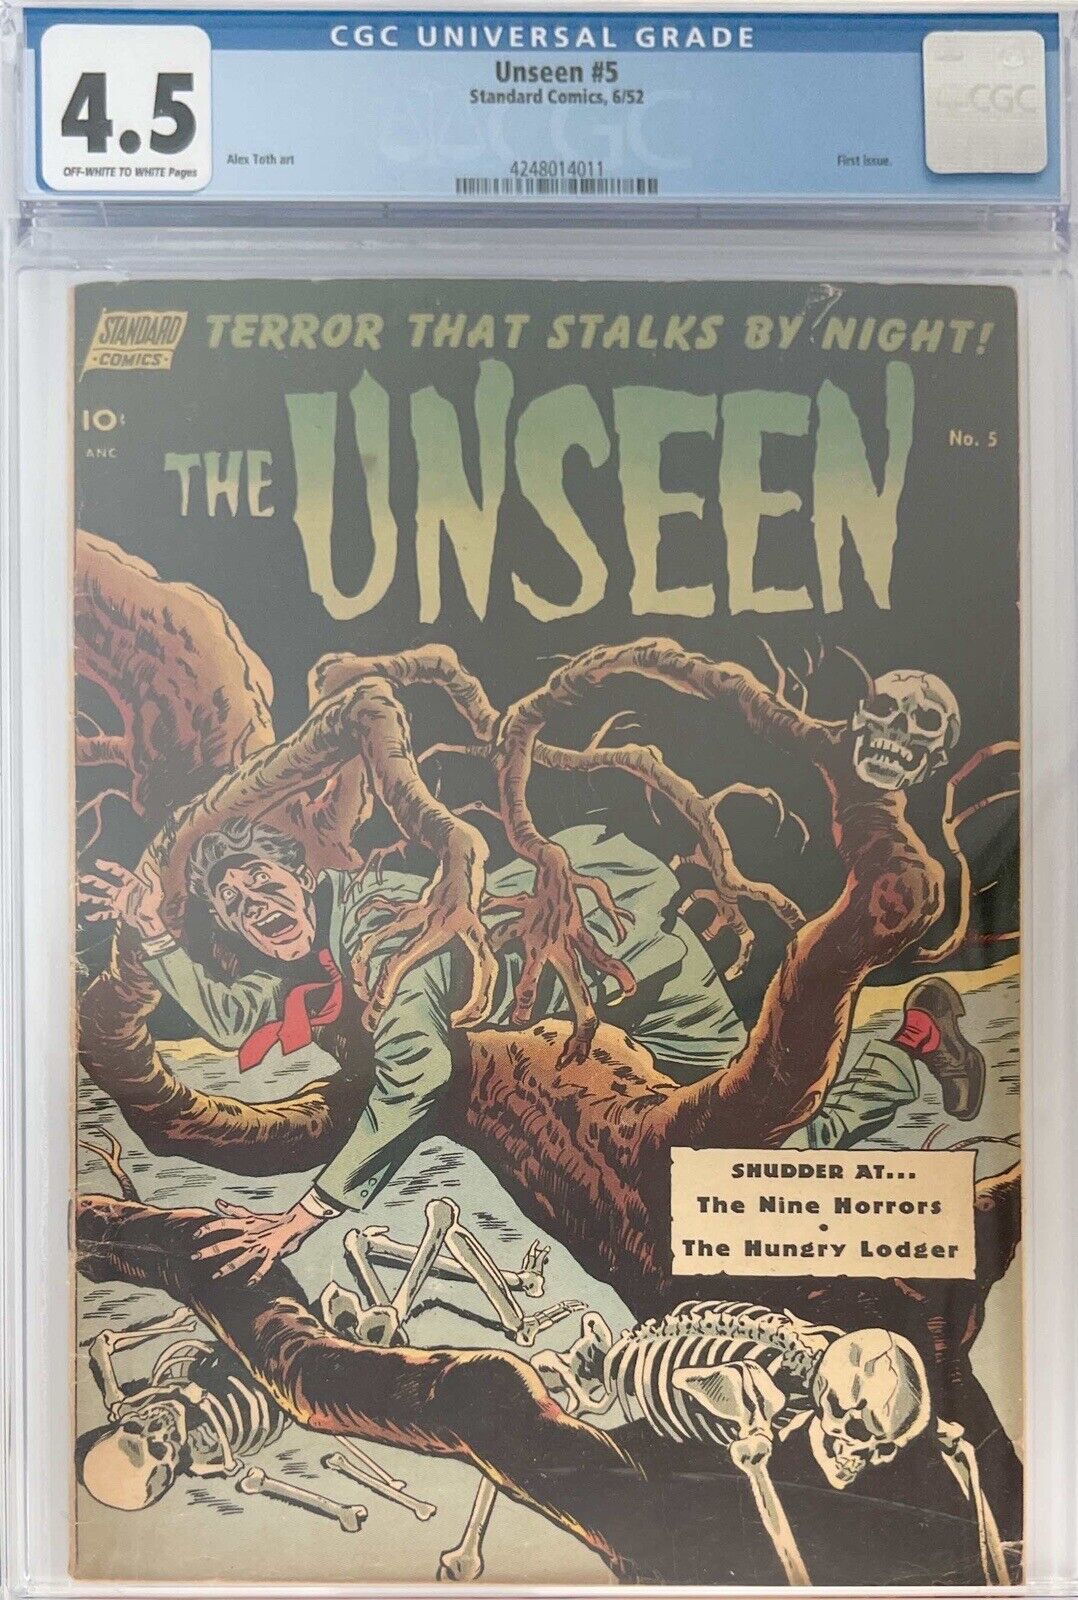 The Unseen 5 - Standard Comics 1952 Golden Terror That Stalks by Night